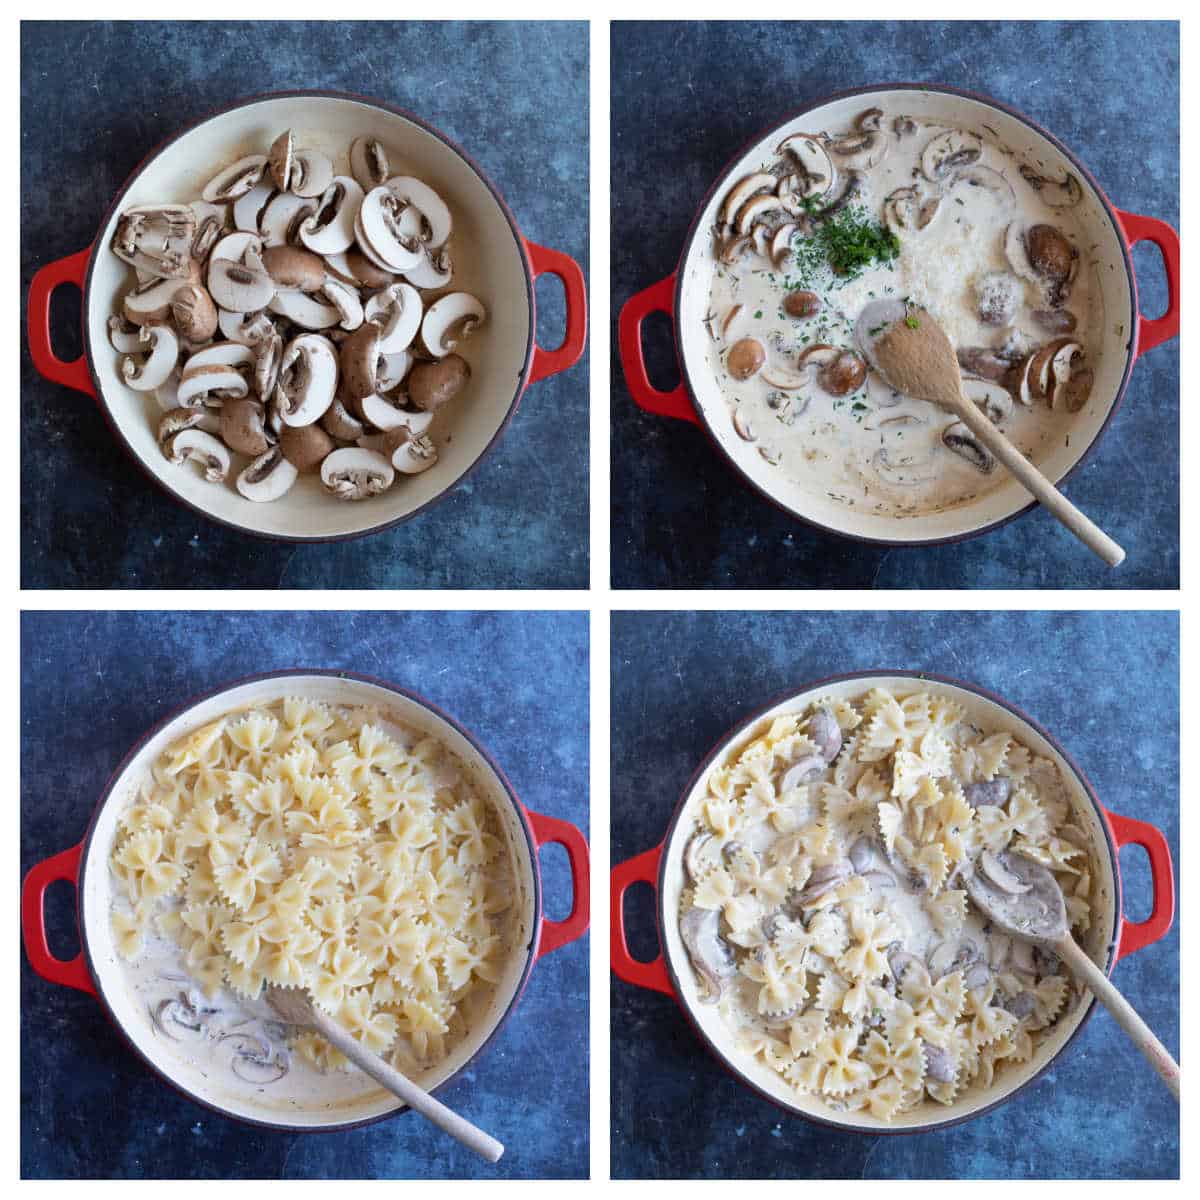 Step by step photo instructions for making garlic mushroom pasta.